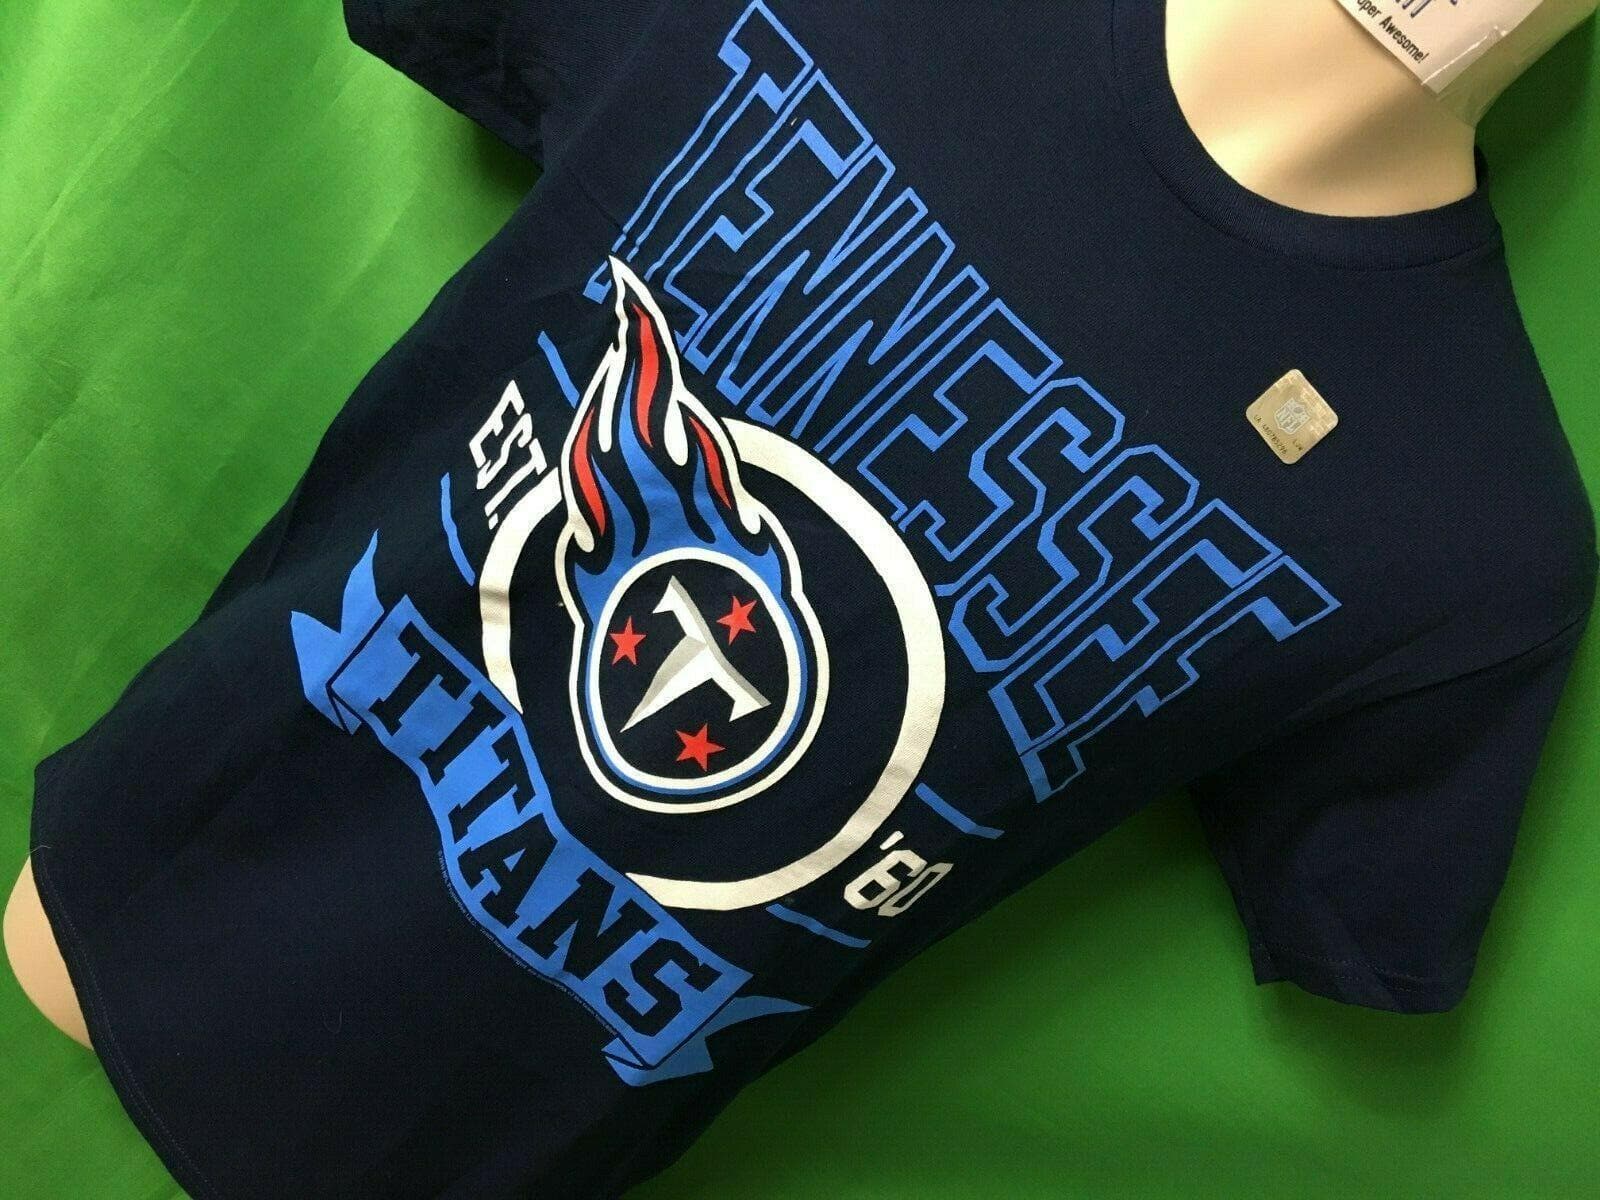 NFL Tennessee Titans Junk Food T-Shirt Men's Small NWT